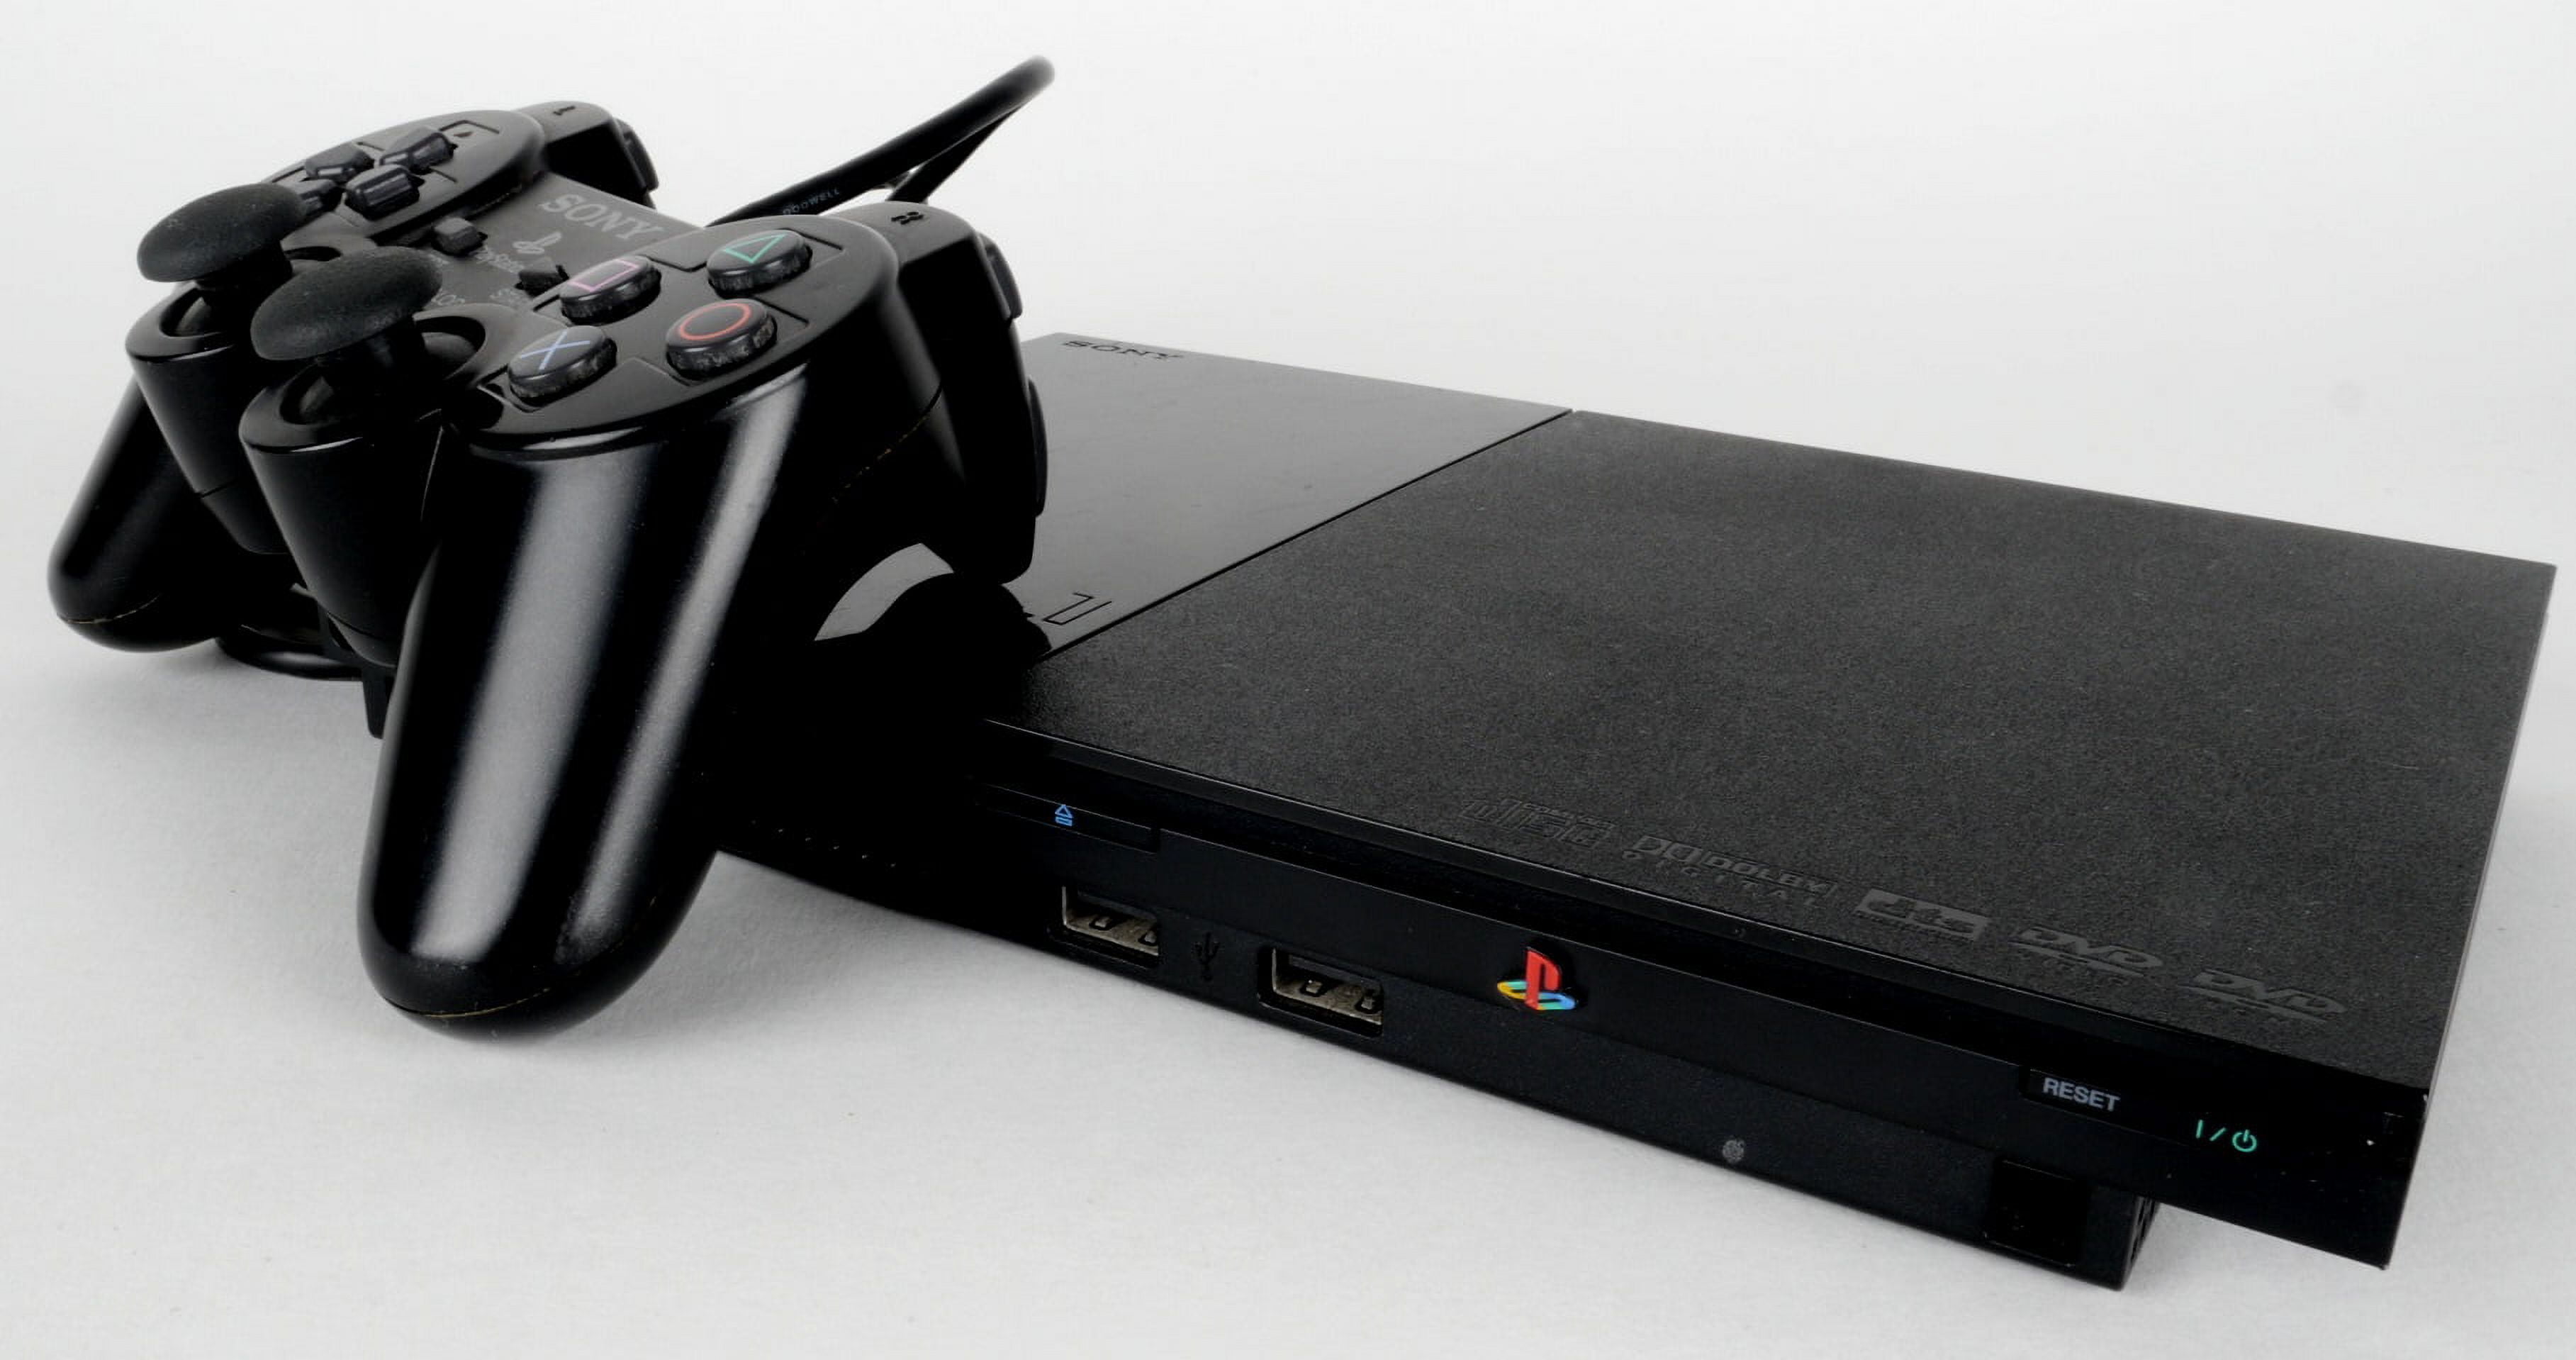 Restored Sony PlayStation 2 Slim Game Console (Refurbished